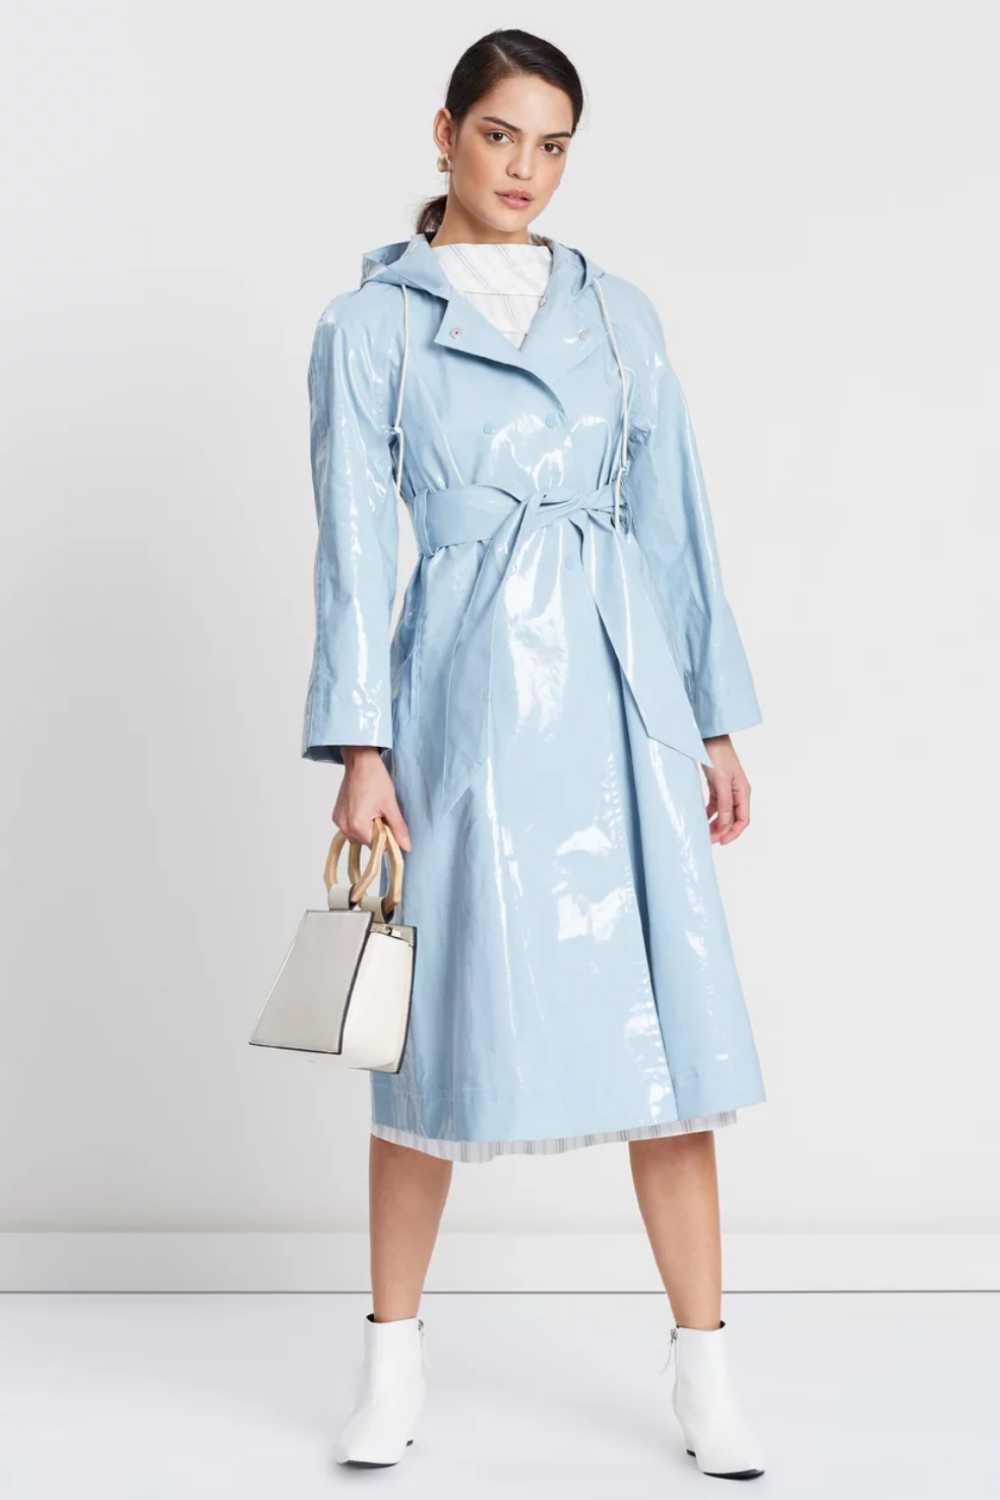 Patent raincoat winter fashion